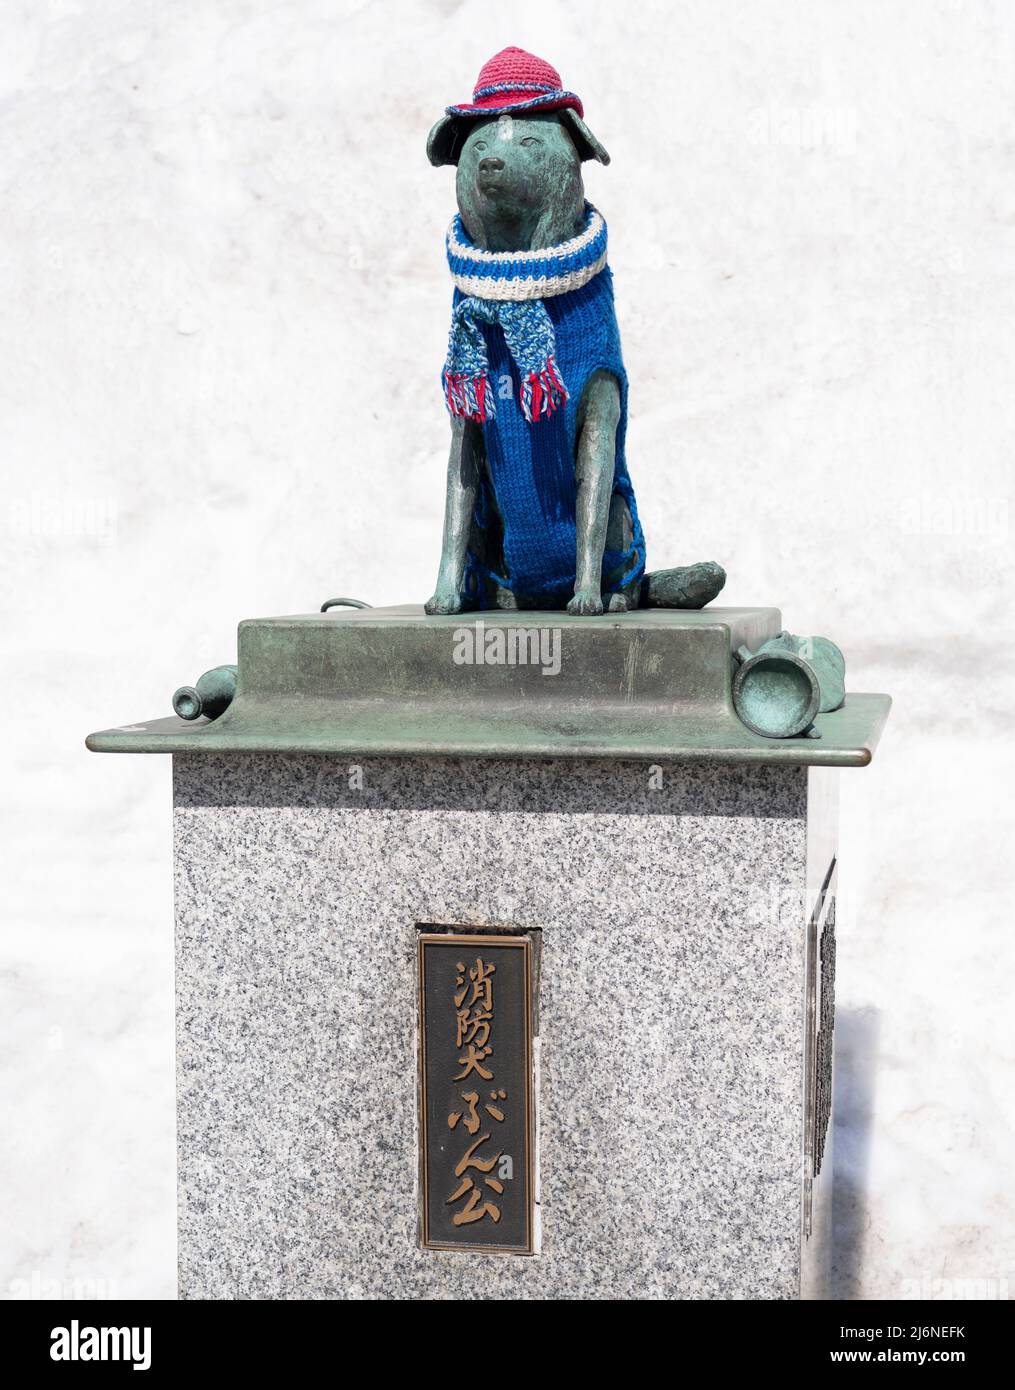 Skulptur von Brave Dog Bunchan - Otaru, Hokkaido, Japan Stockfoto